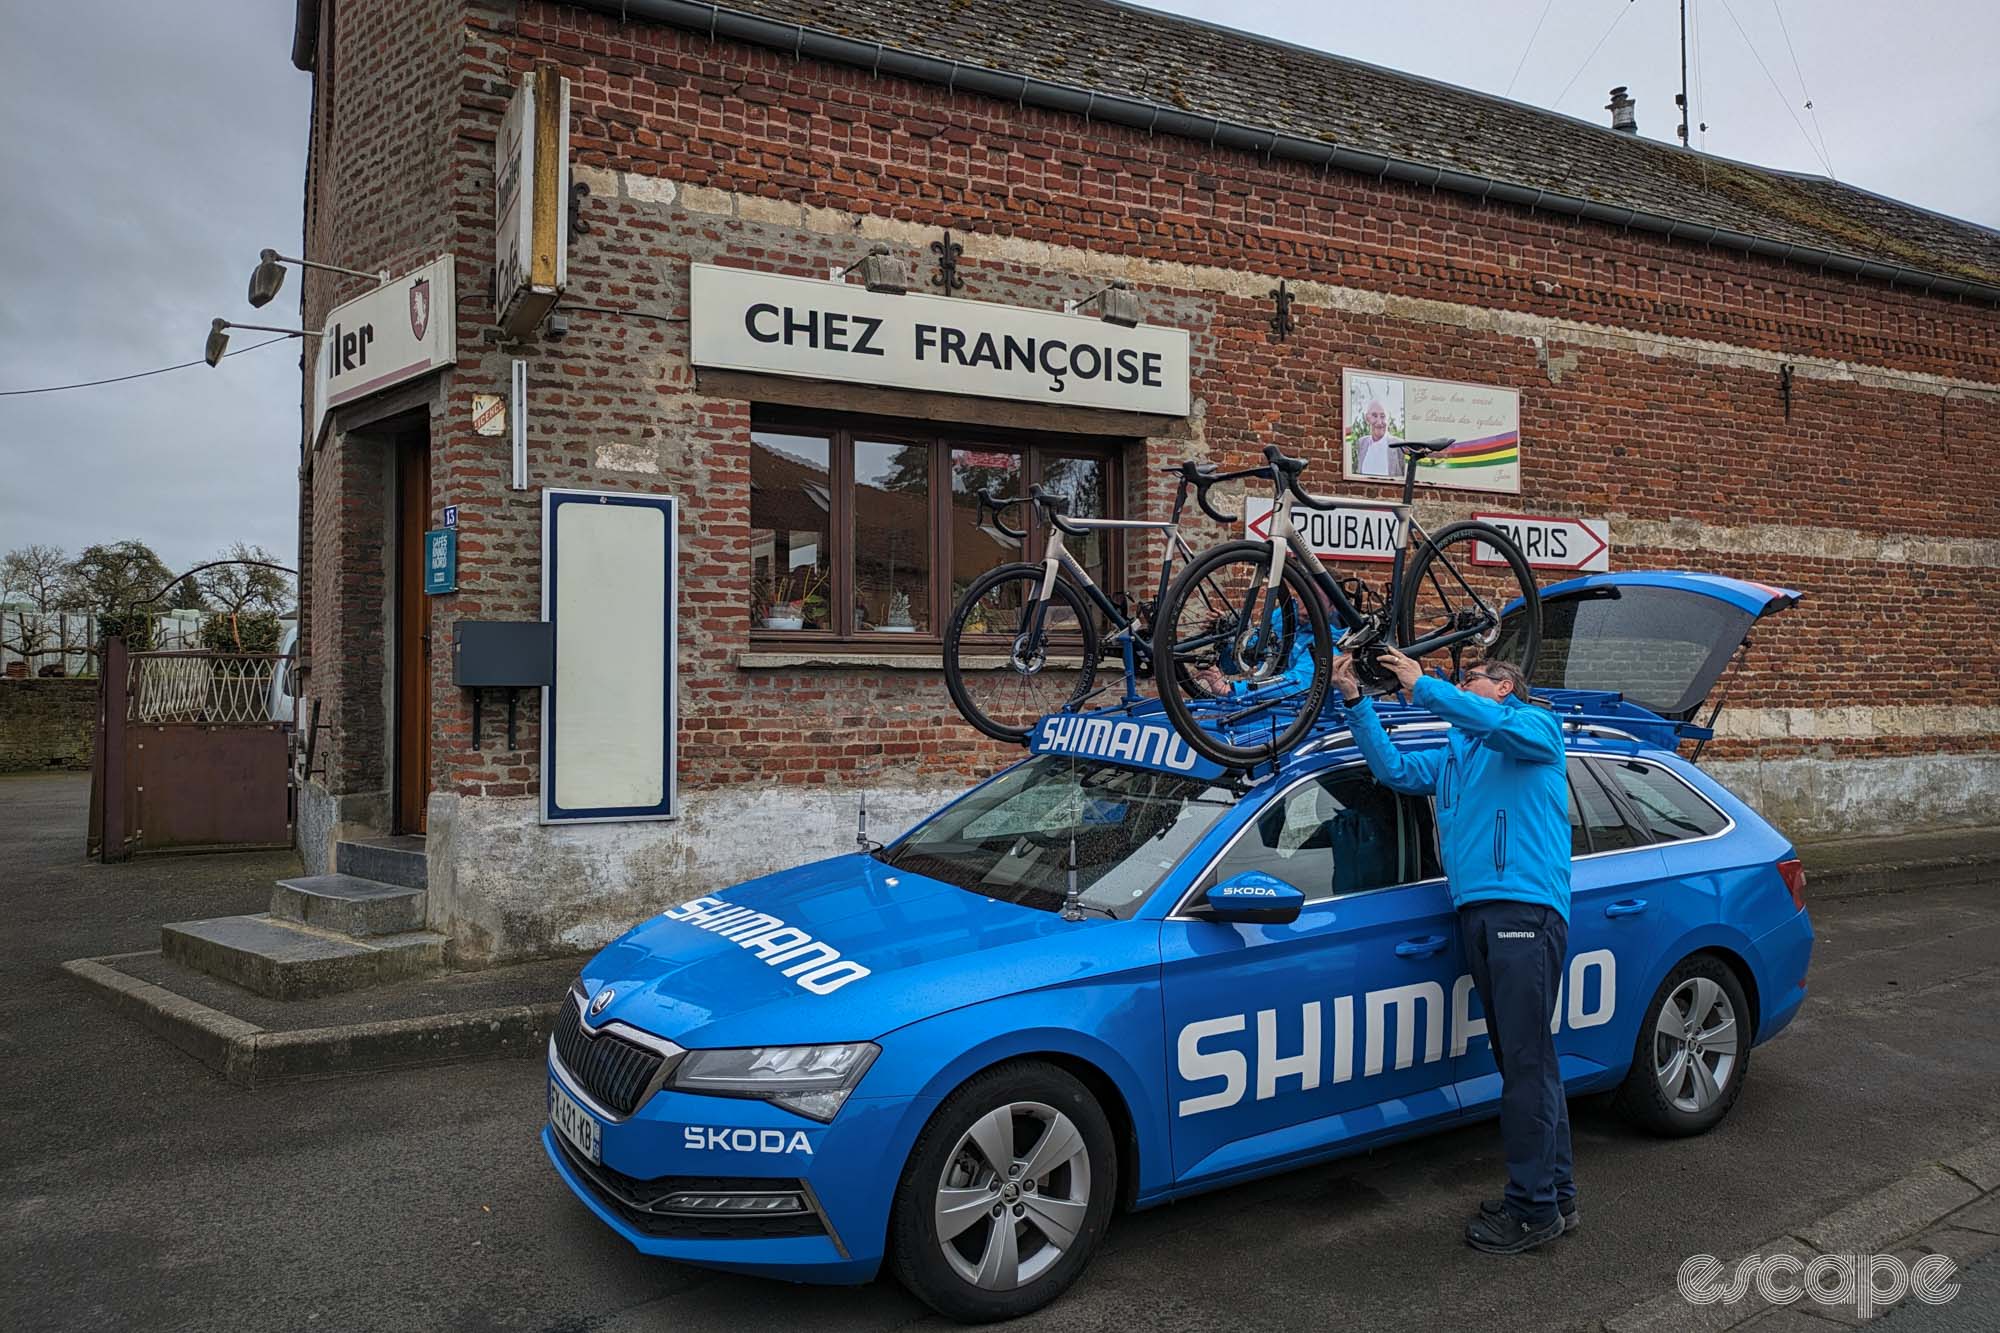 Bruno Mallet checks a spare bike atop the blue Shimano neutral service car outside the brown brick Chez Francoise building.